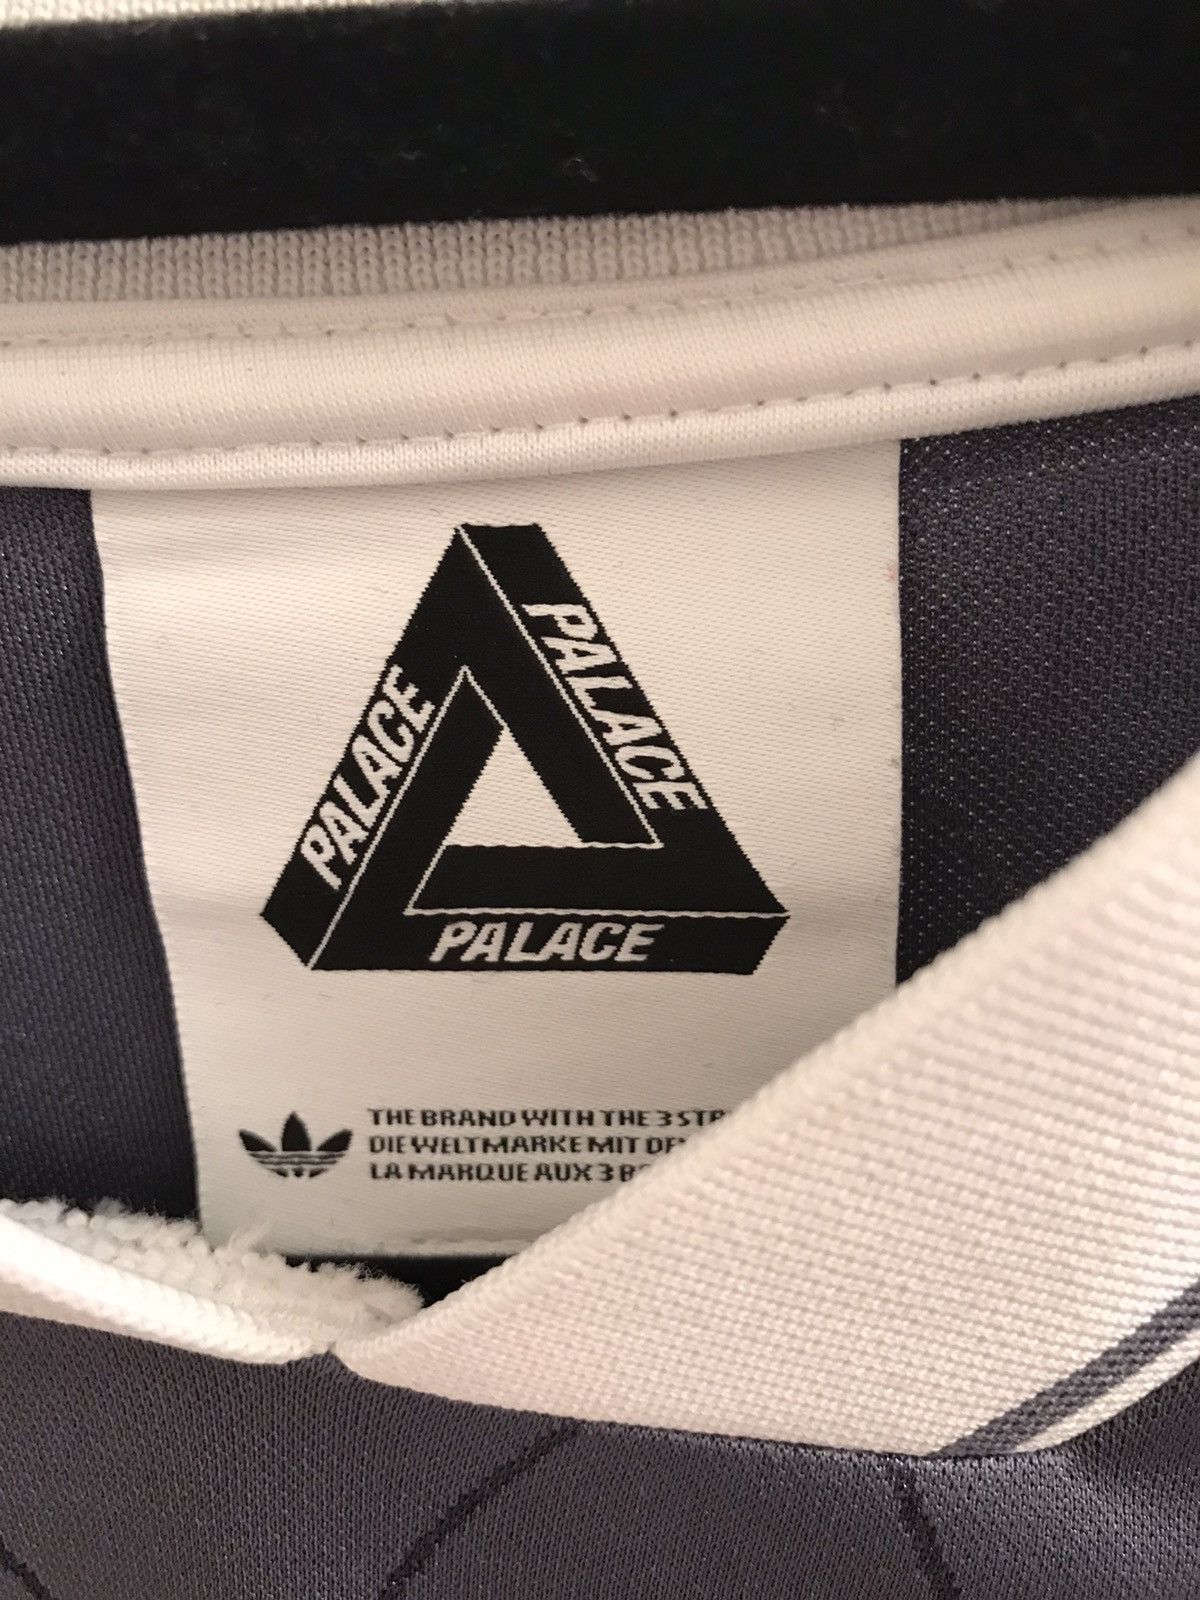 Adidas Palace x Adidas Tri-Ferg Soccer Jersey Size US L / EU 52-54 / 3 - 3 Thumbnail